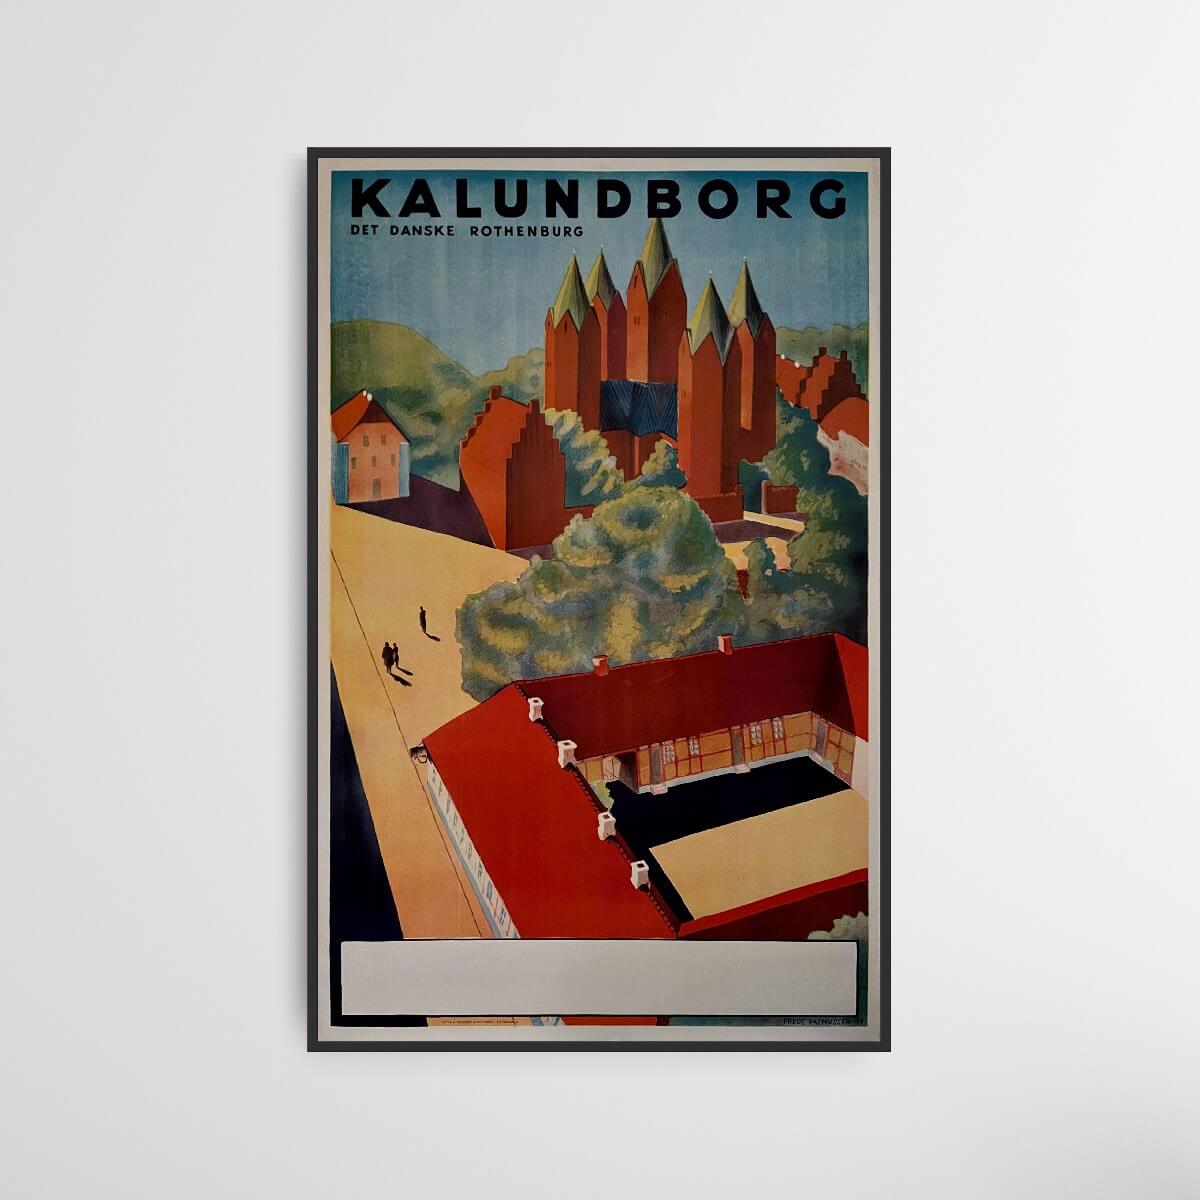 Kalundborg - Det danske Rothenburg